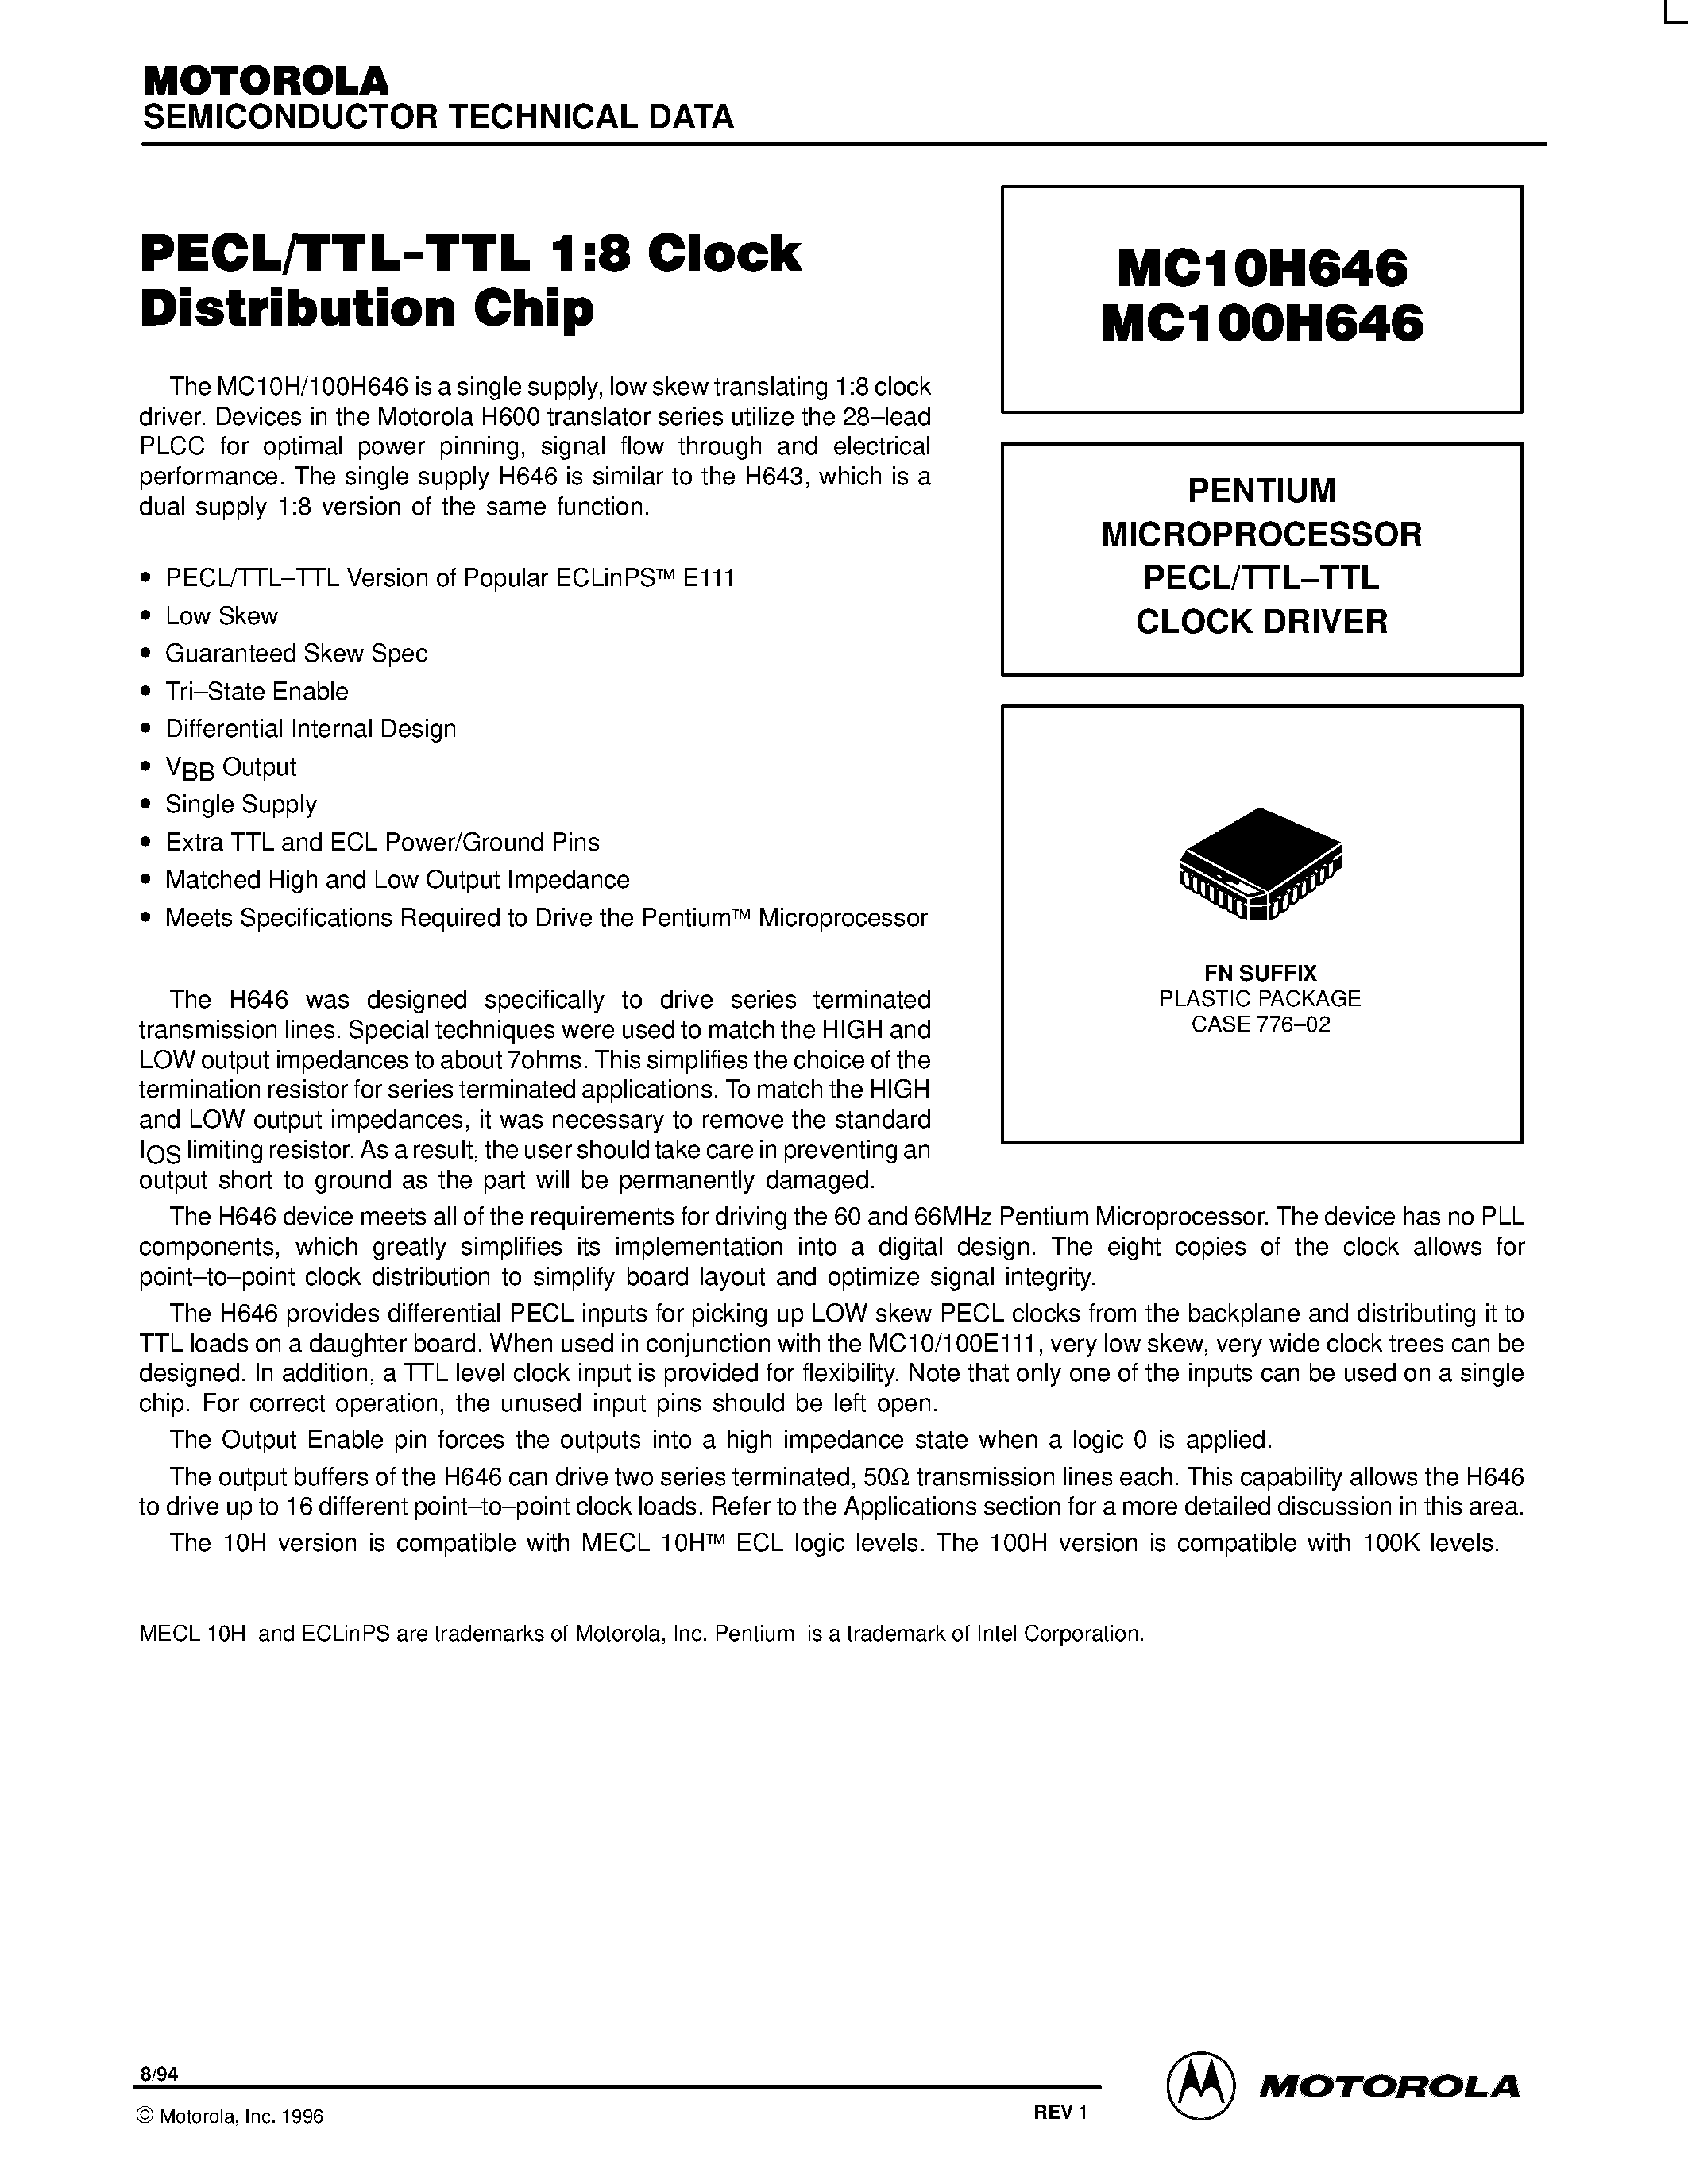 Datasheet MC100H646FN - PENTIUM MICROPROCESSOR PECL/TTL-TTL CLOCK DRIVER page 1